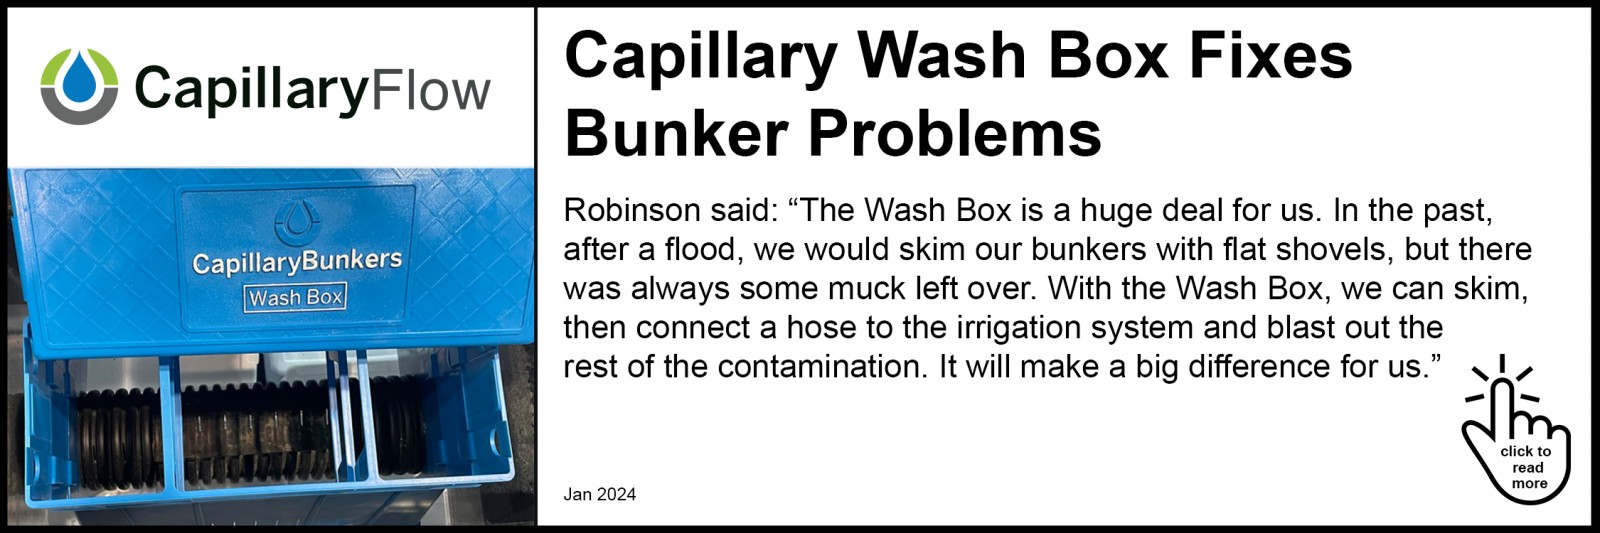 Capillary Wash Box Fixes Bunker Problems